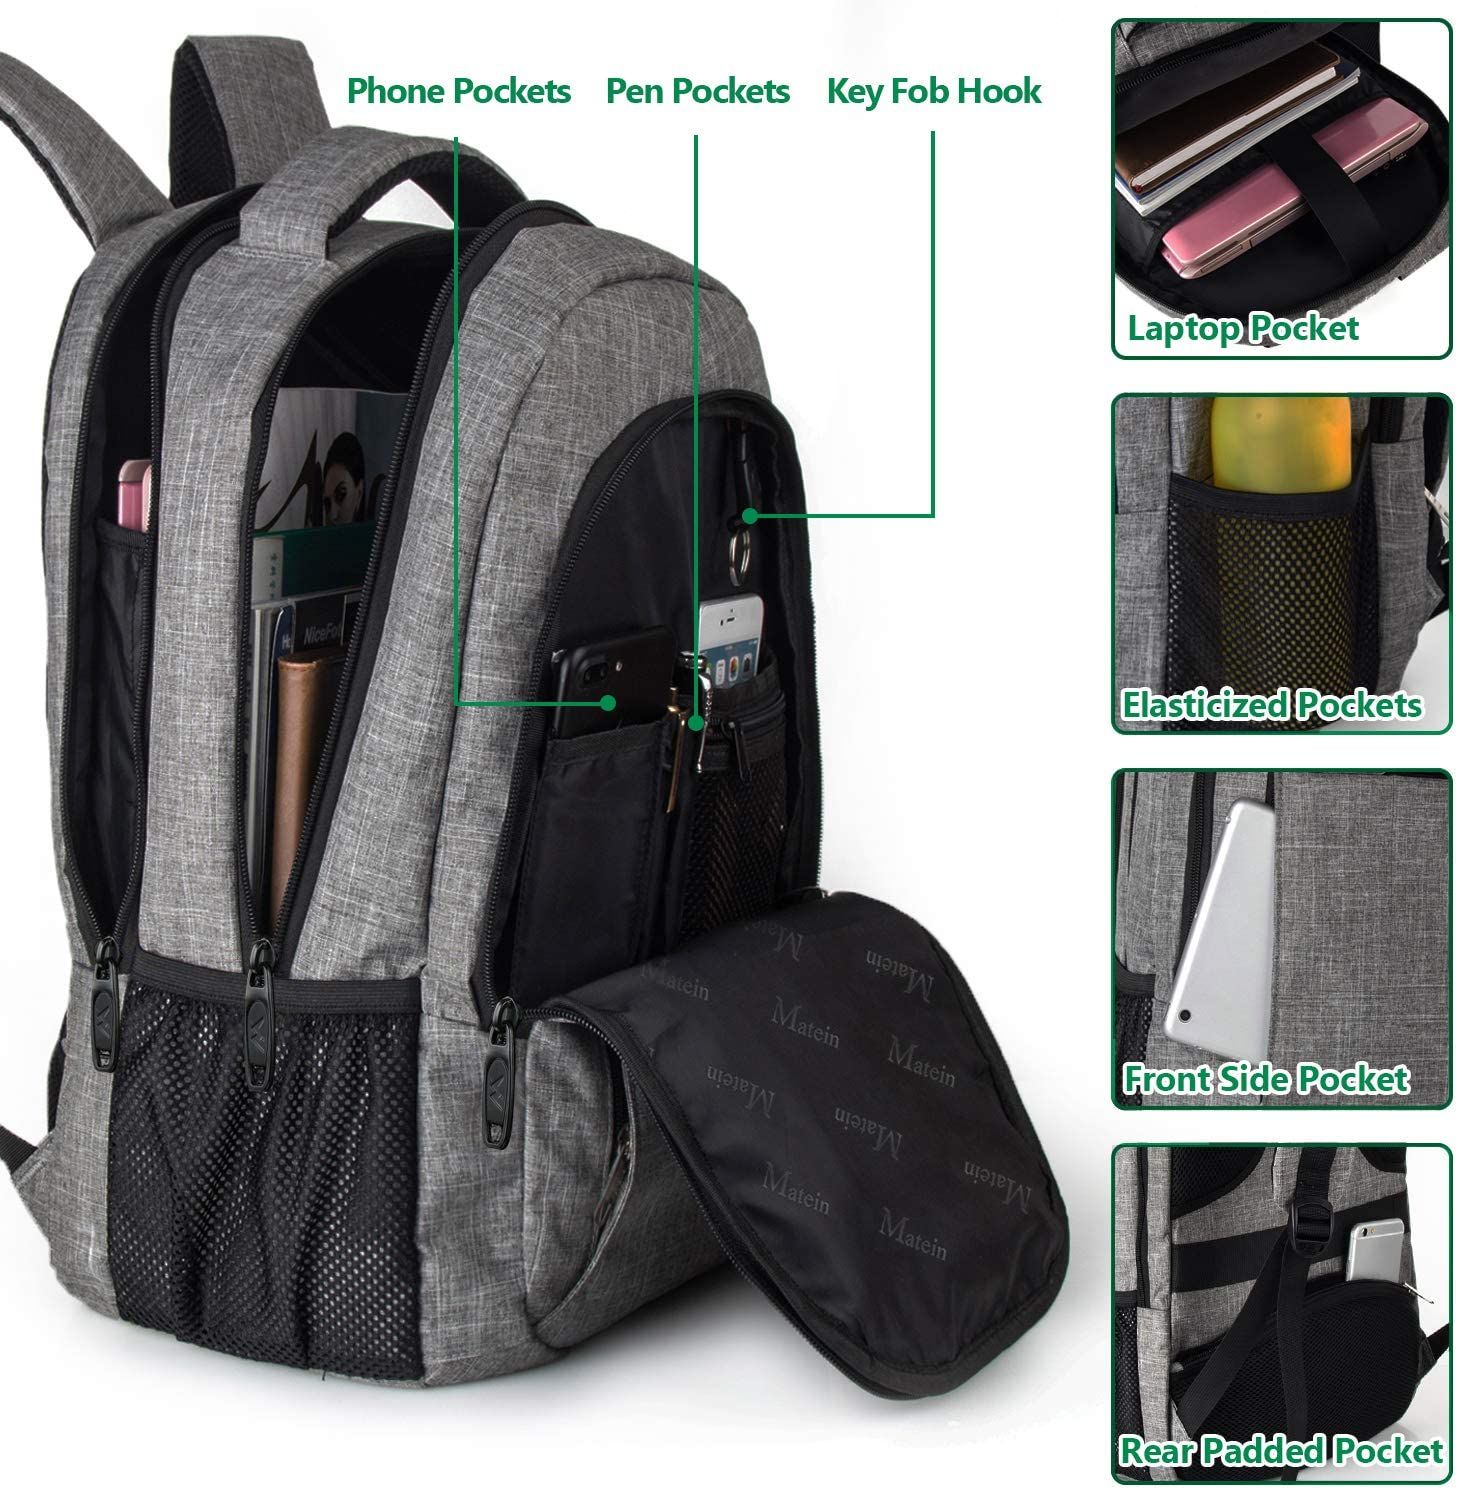 Matein Backpack Design 3